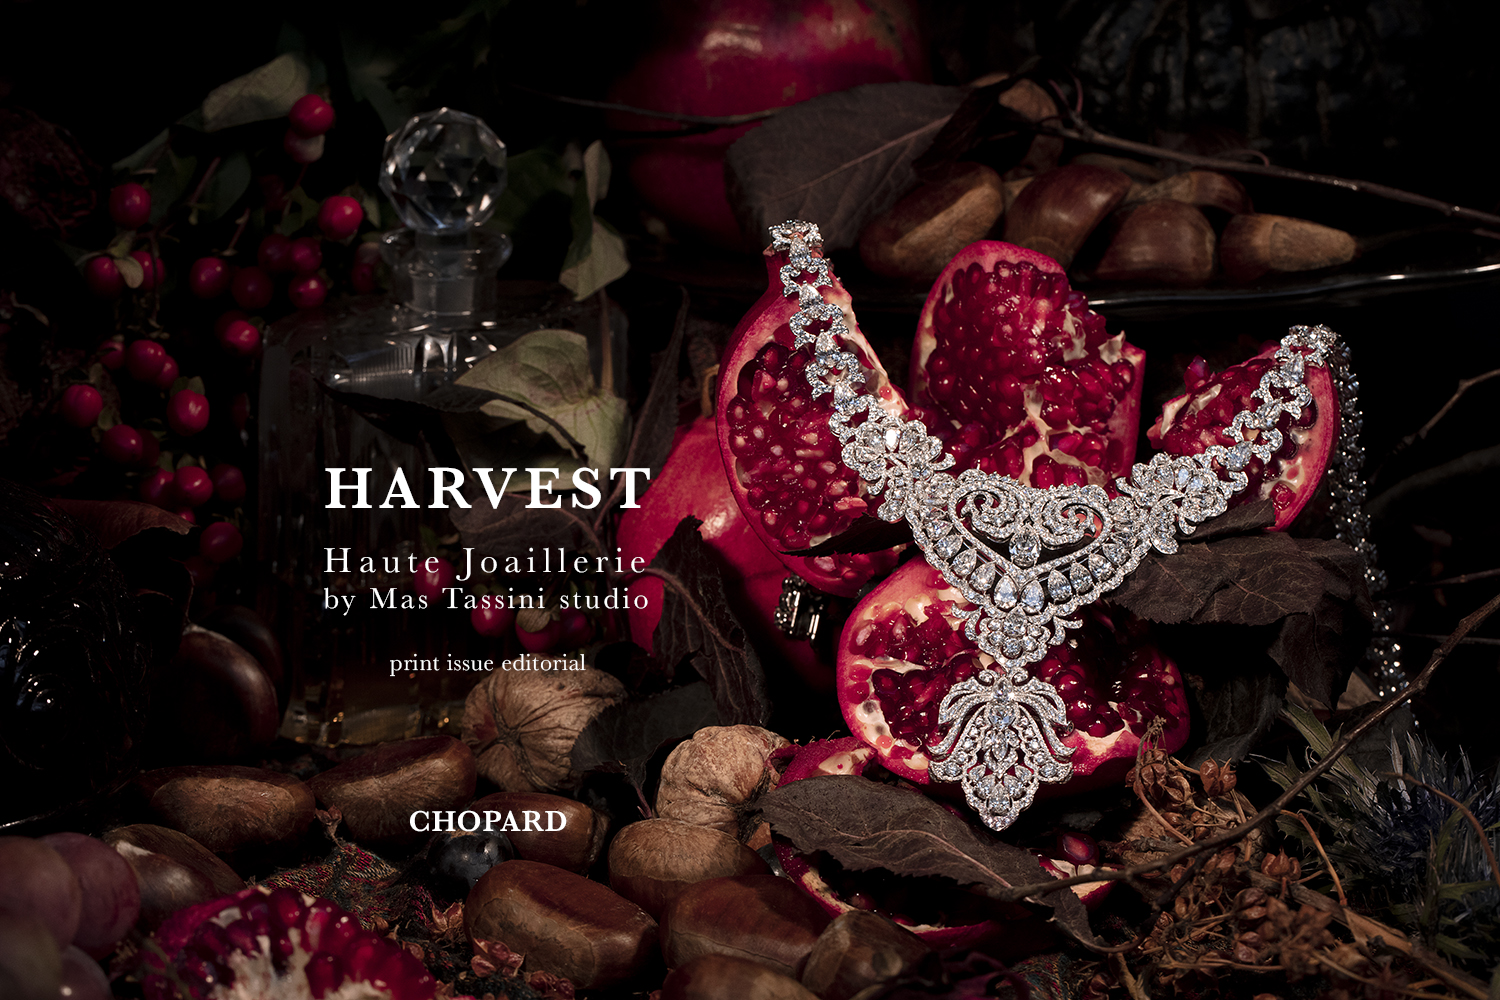 High Jewellery necklace by Chopard, EDGE mag, Mas Tassini studio